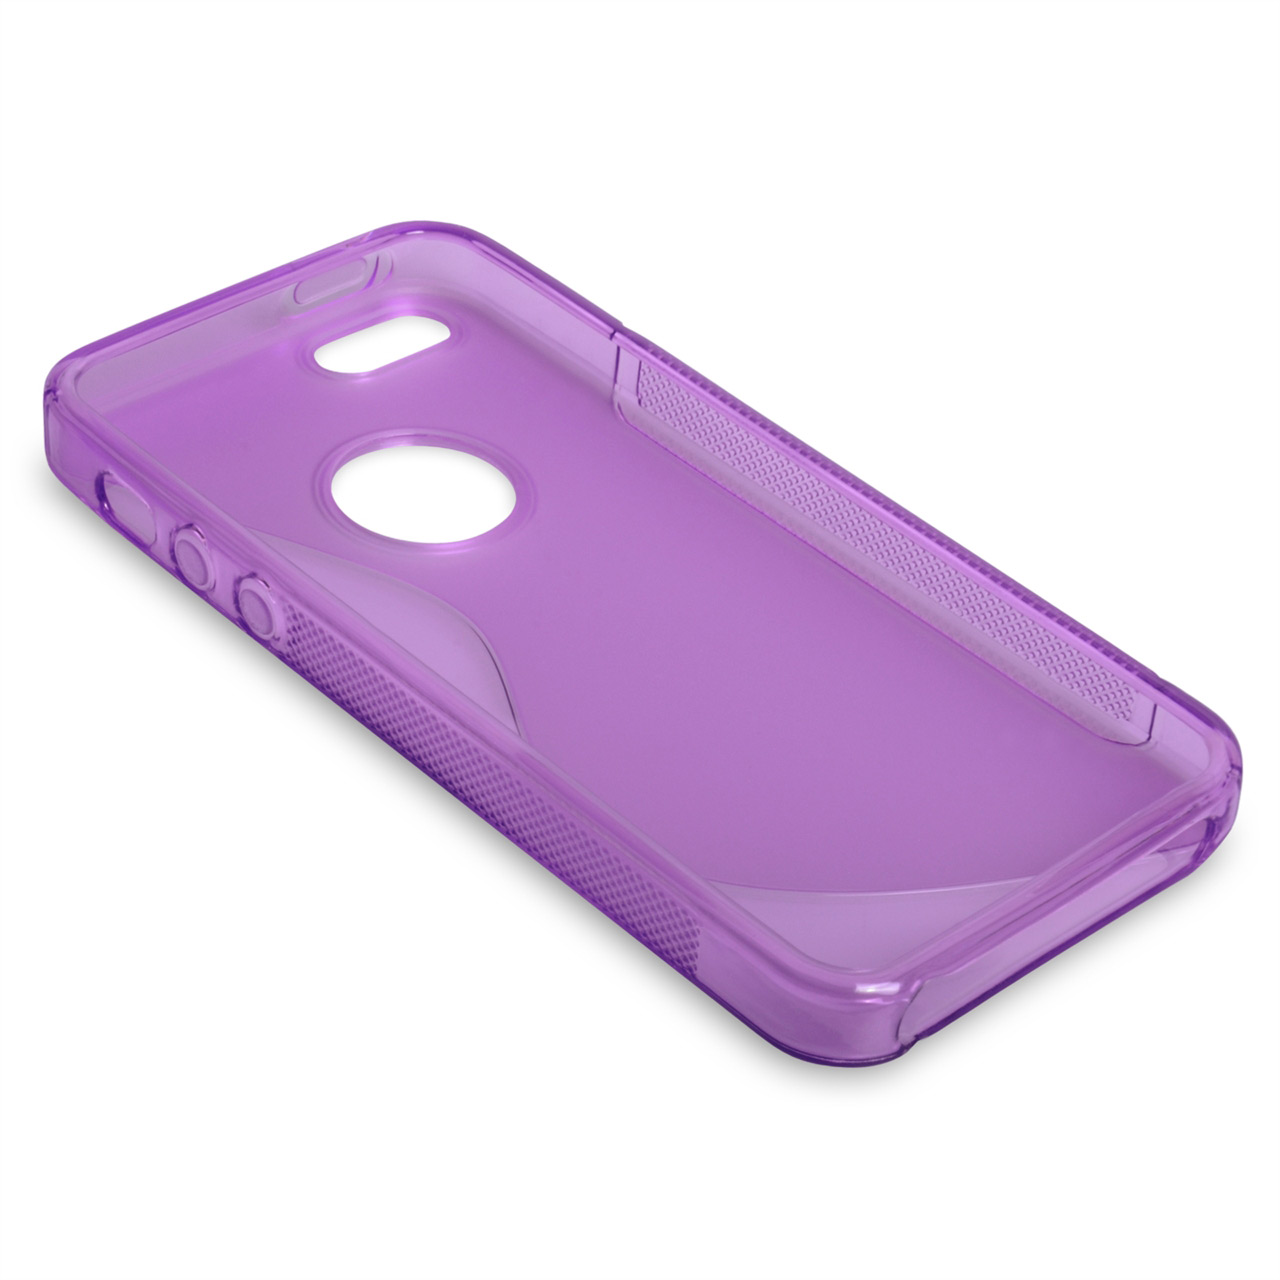 Caseflex iPhone 5 / 5S S-Line Gel Case - Purple